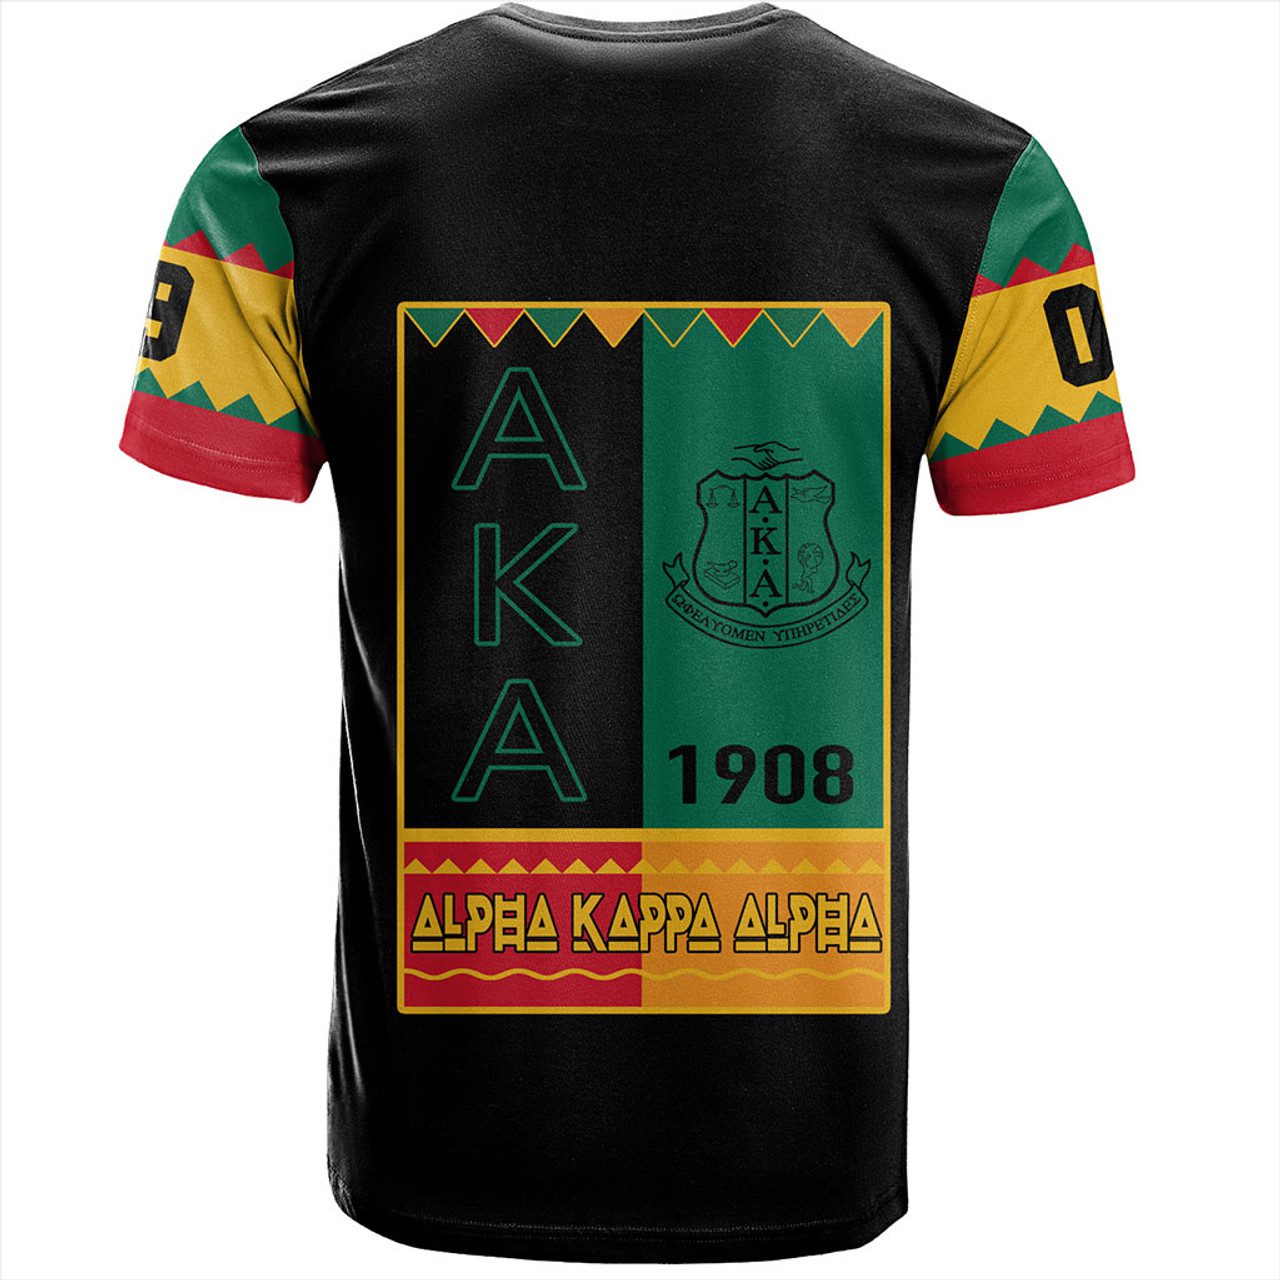 Alpha Kappa Alpha T-Shirt Black History Month